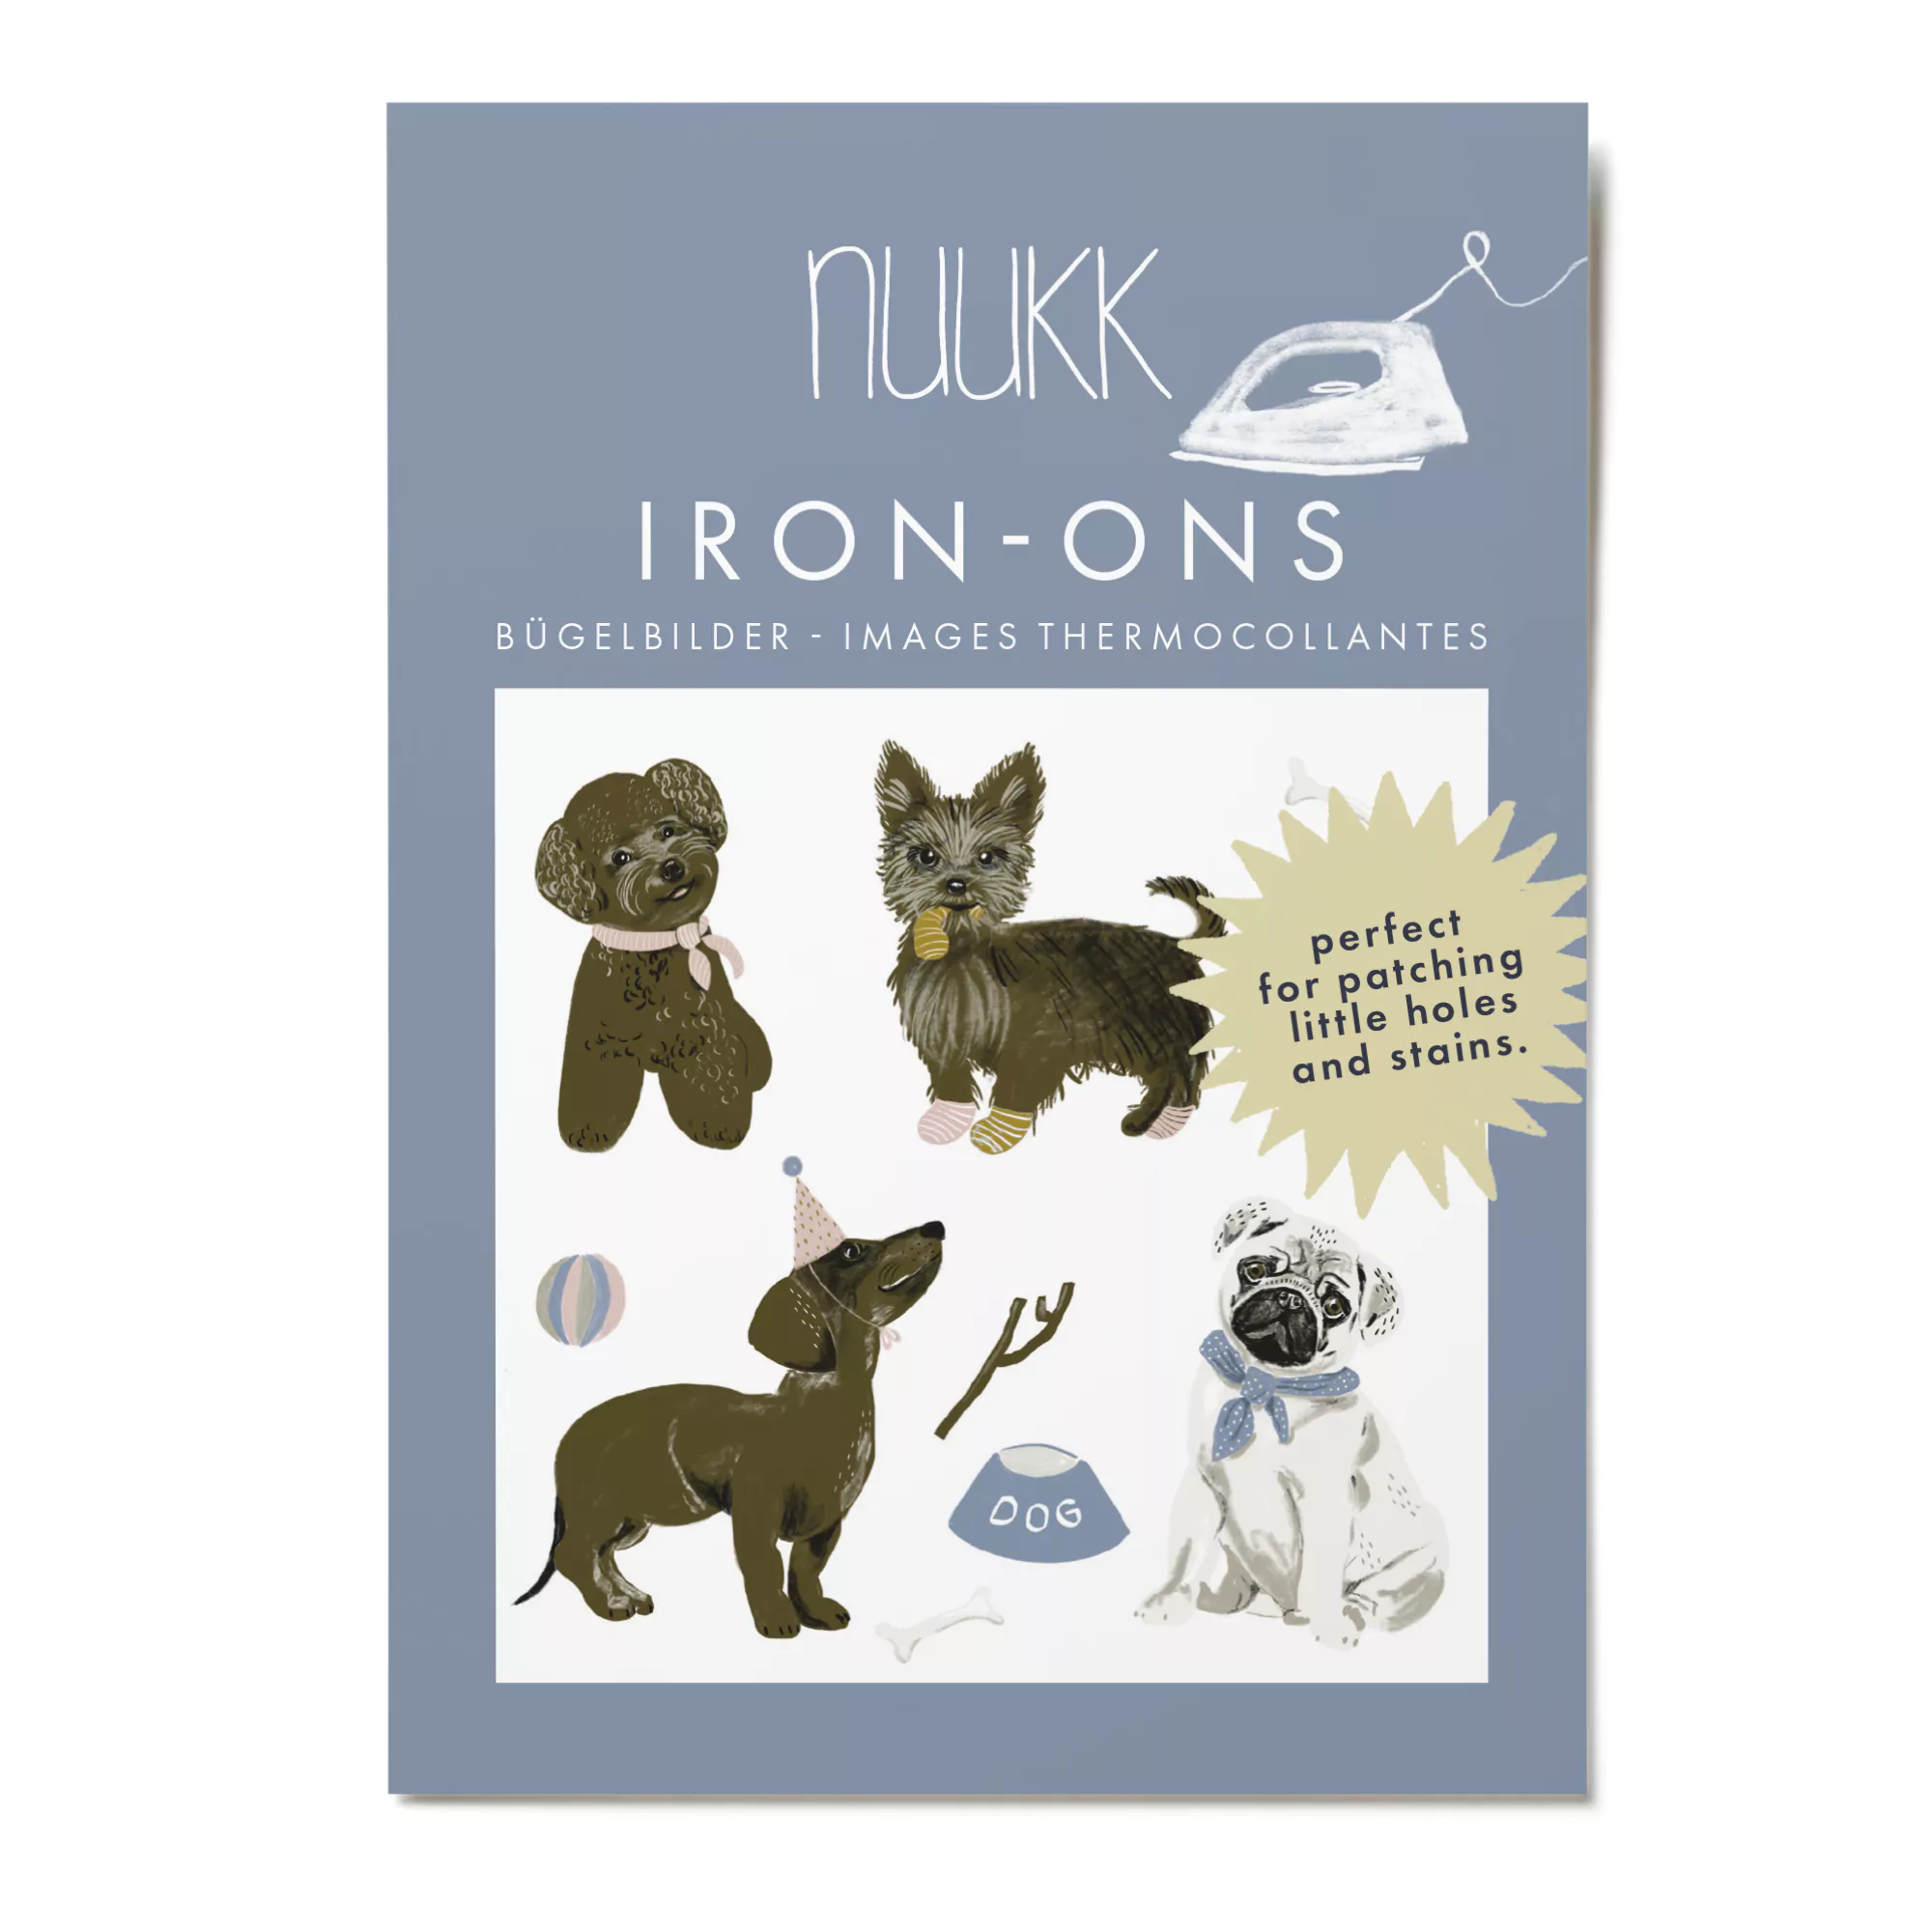 Dogs-iron-ons-packaging-nuukk-dackel-mops-fluffy